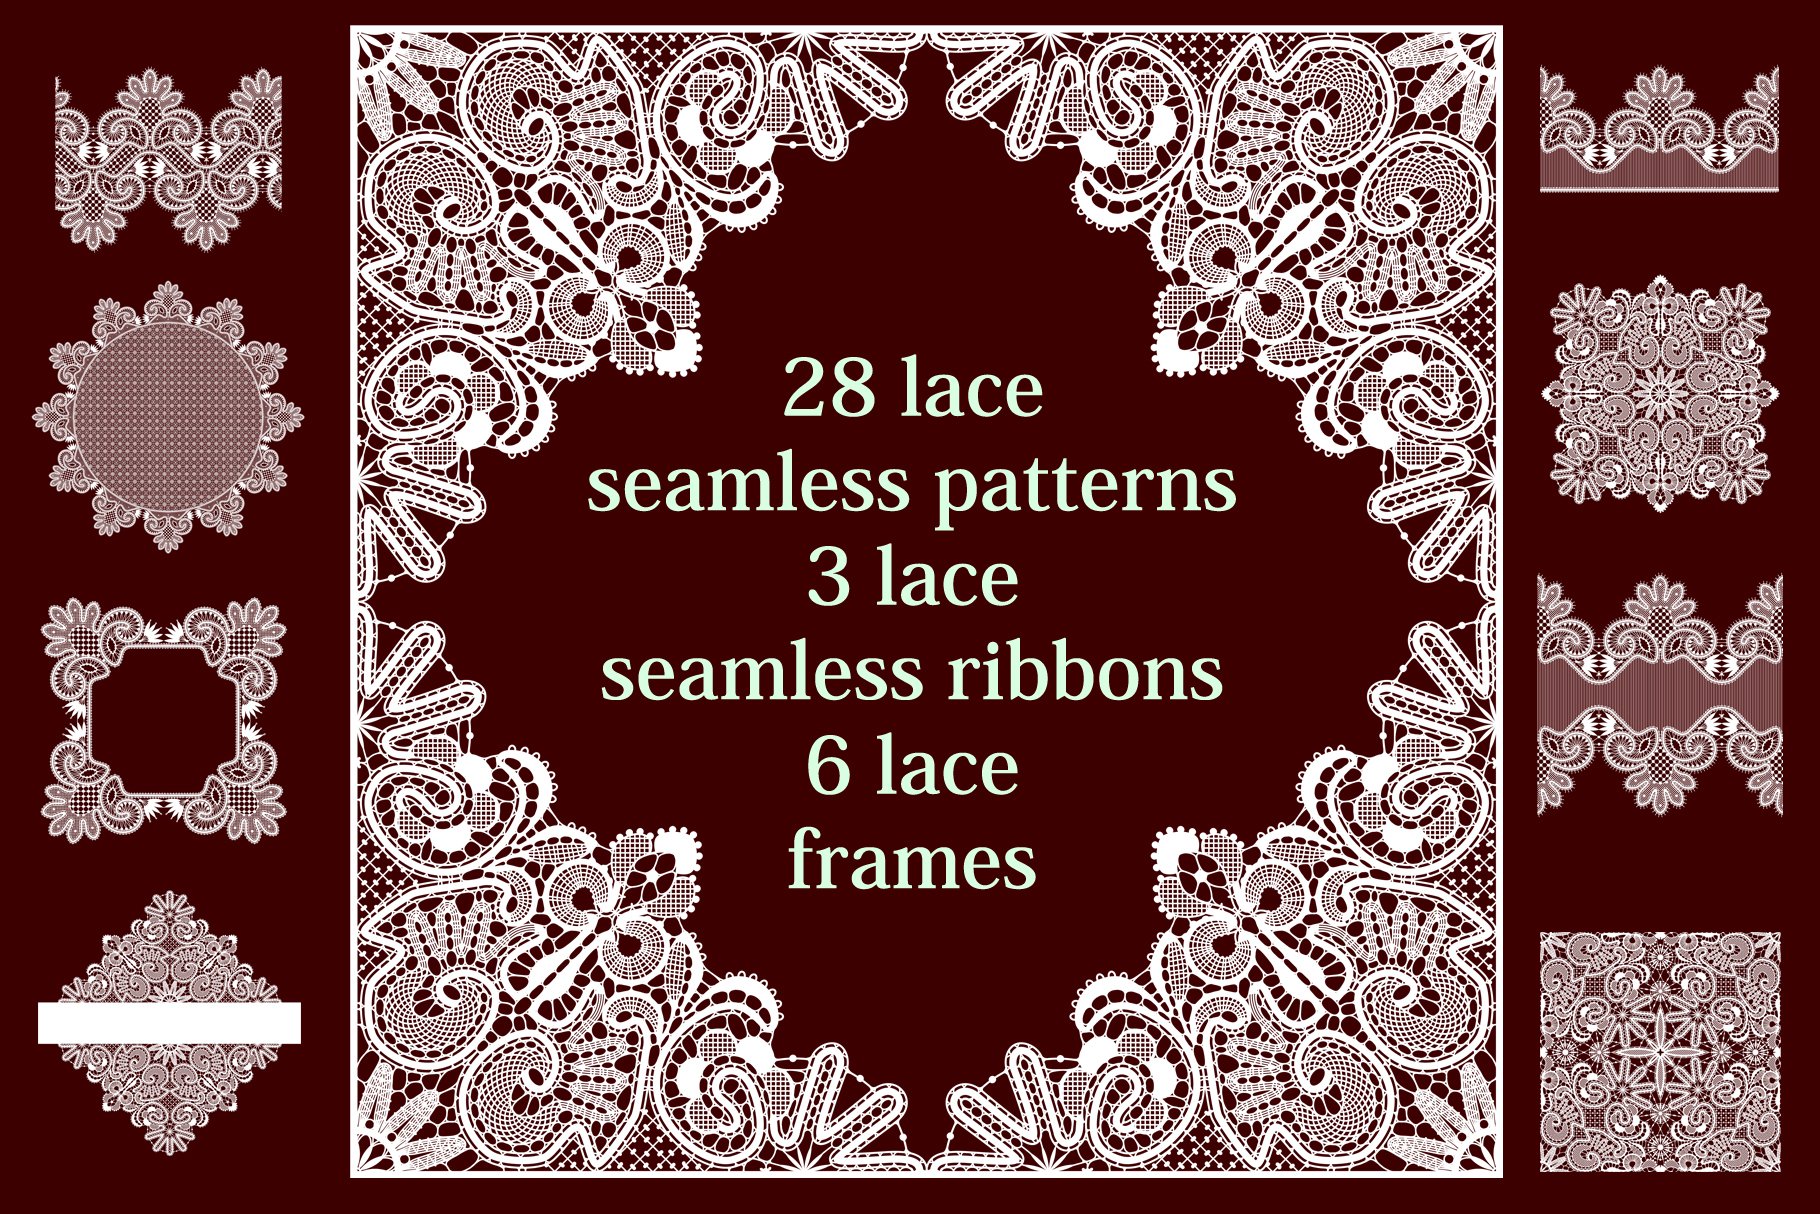 28 Lace Seamless Patterns 3 Lace Seamless Ribbons 6 Lace Frames.